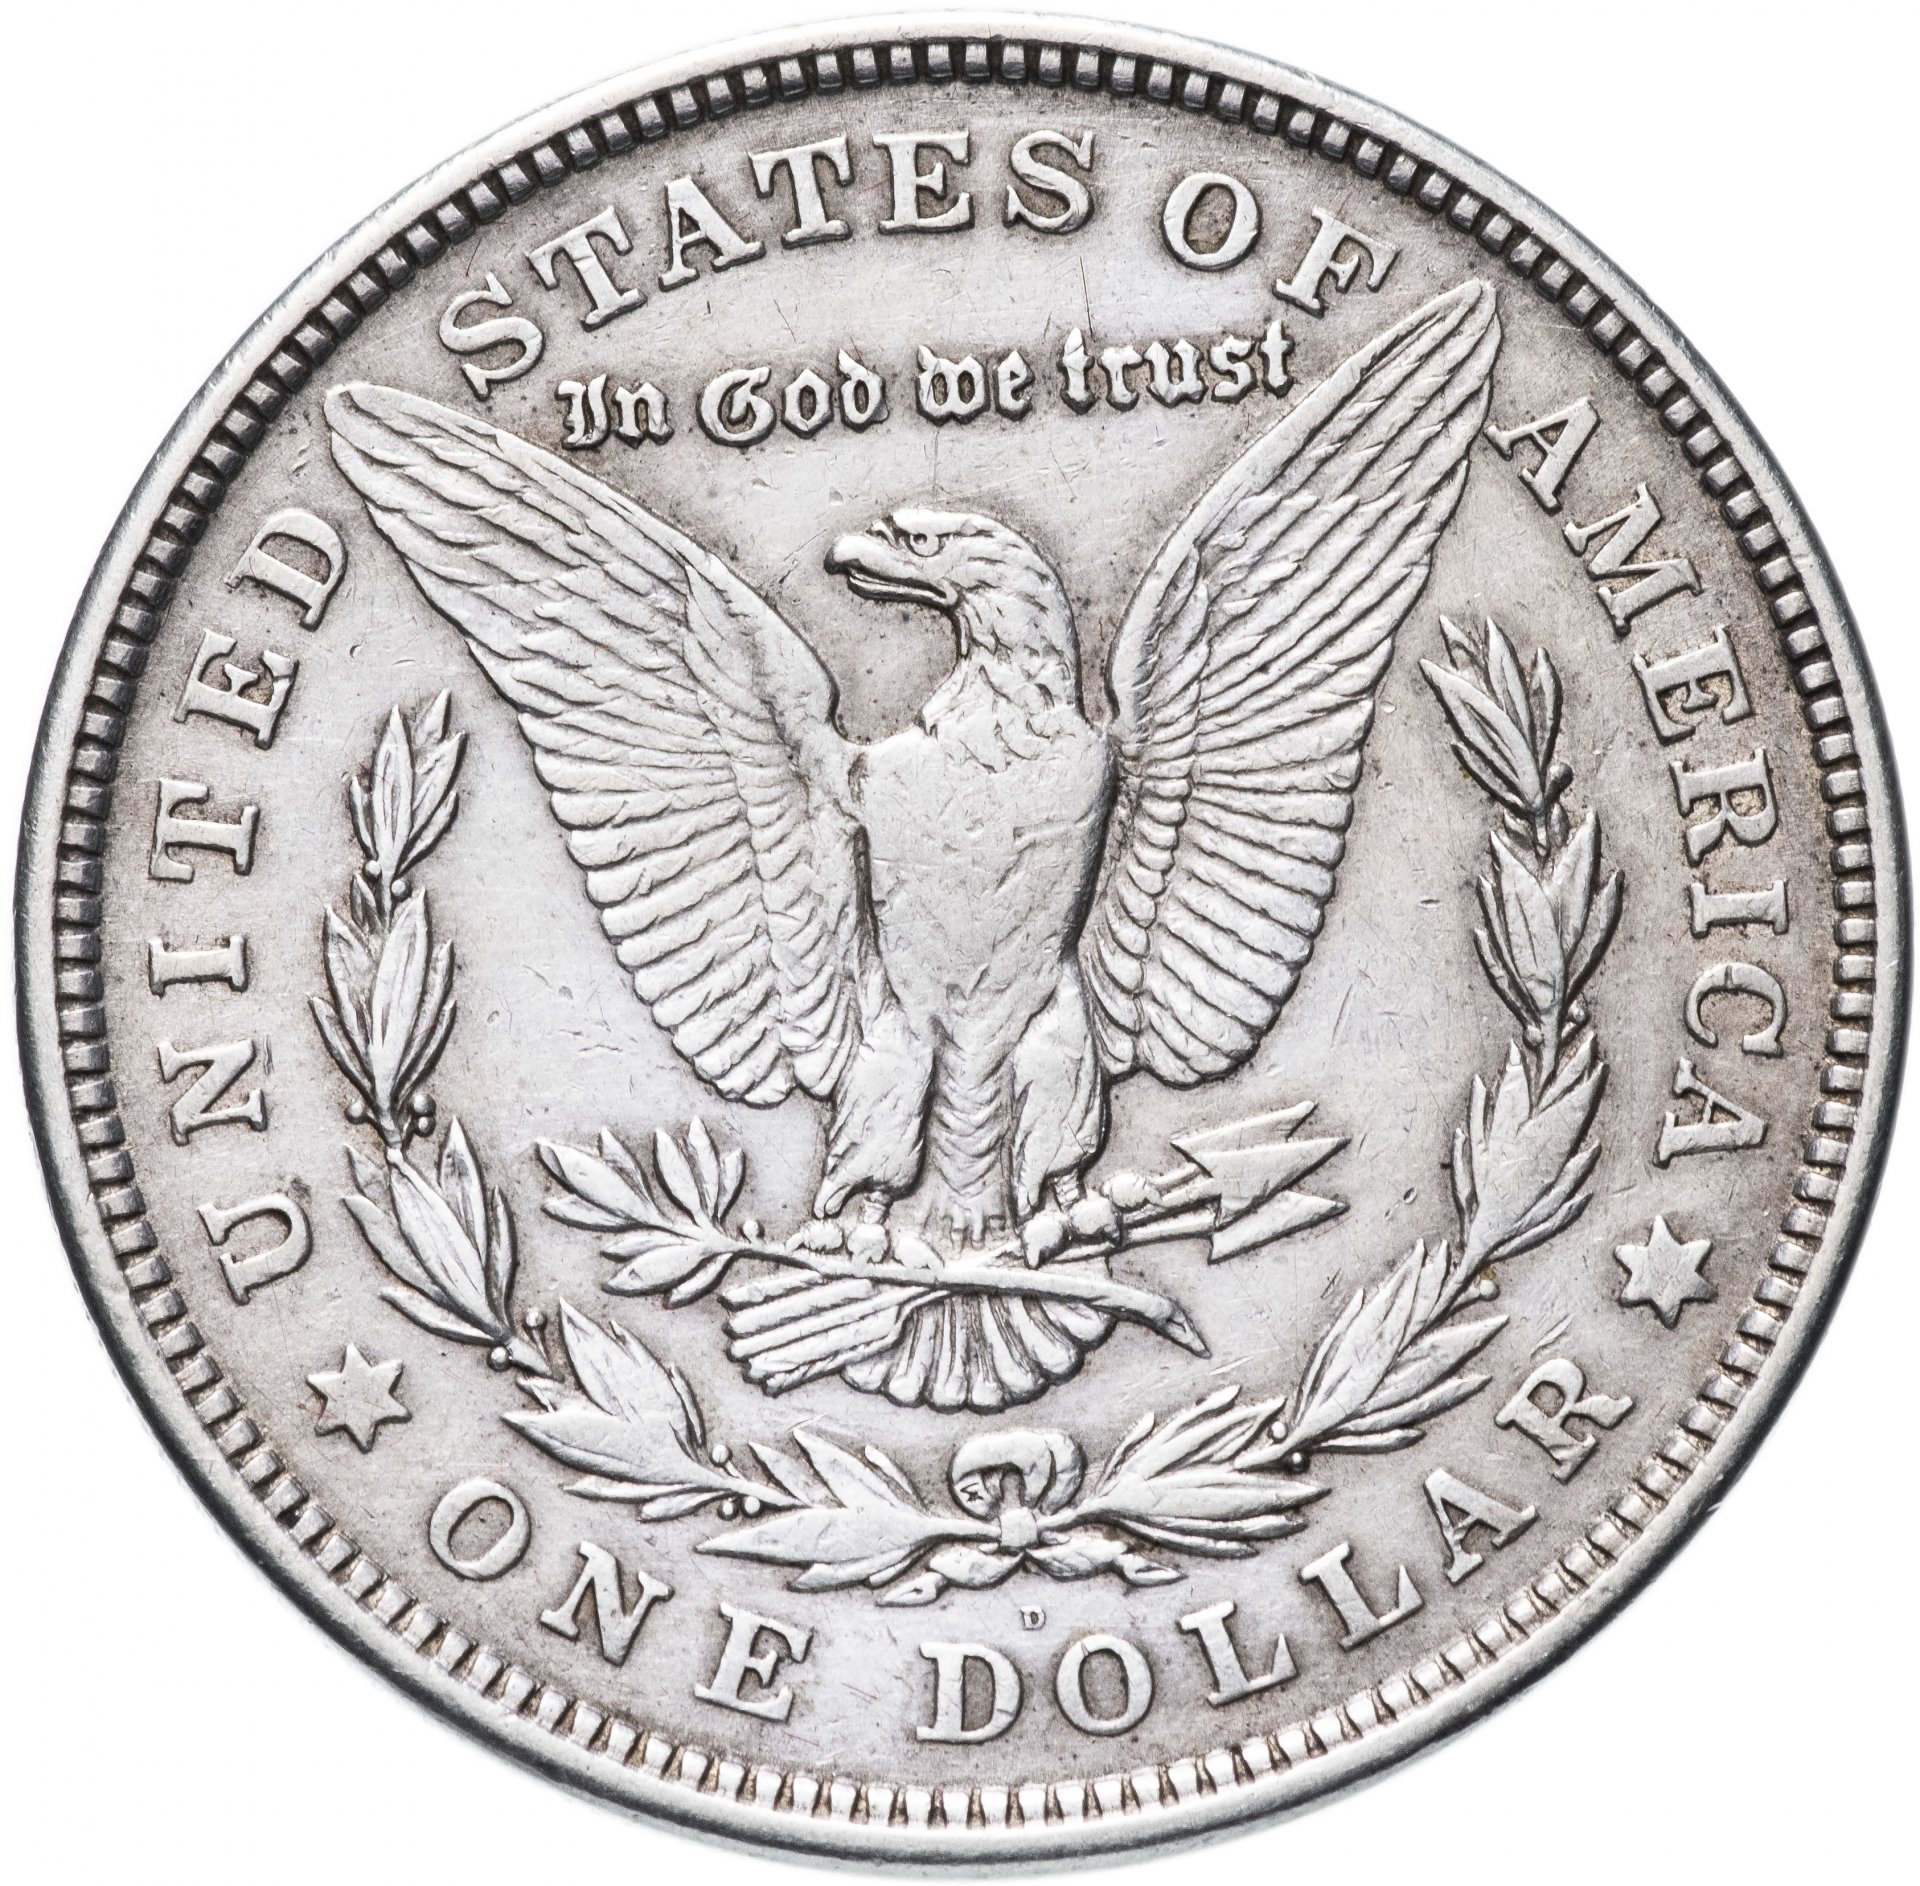 1 доллар работа. 1 Доллар США. Доллар США 1921 года Морган серебро. Американский доллар. Один американский доллар.